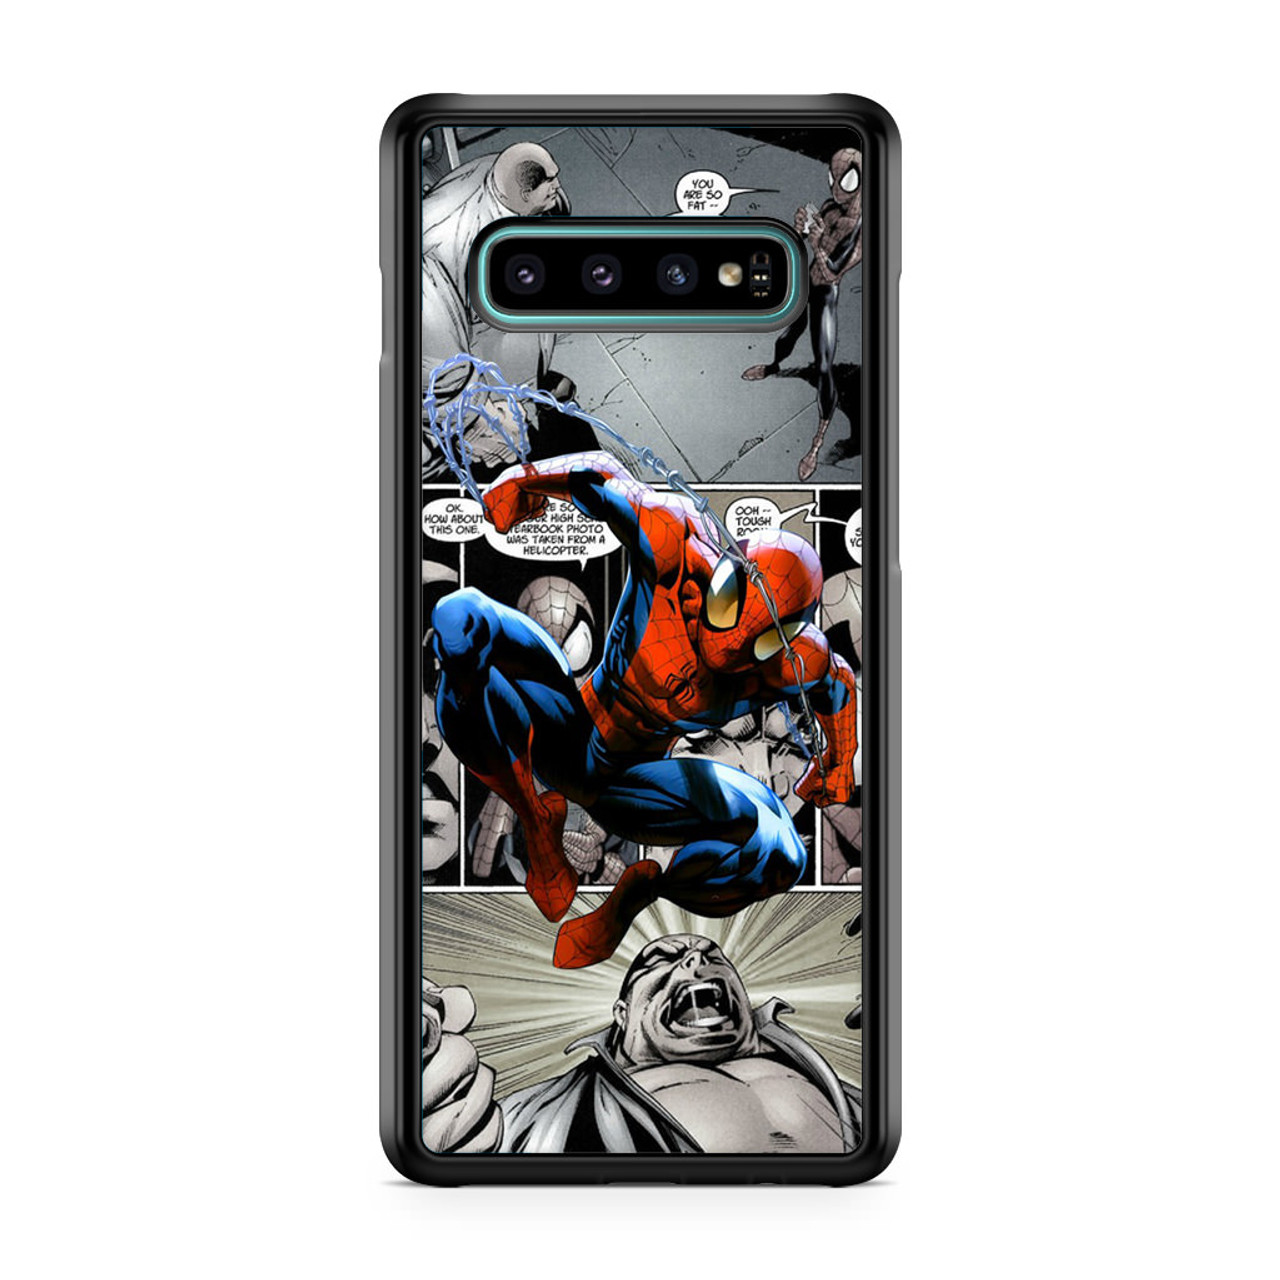 Spiderman Comics Wallpaper Samsung Galaxy S10 Plus Case Jocases